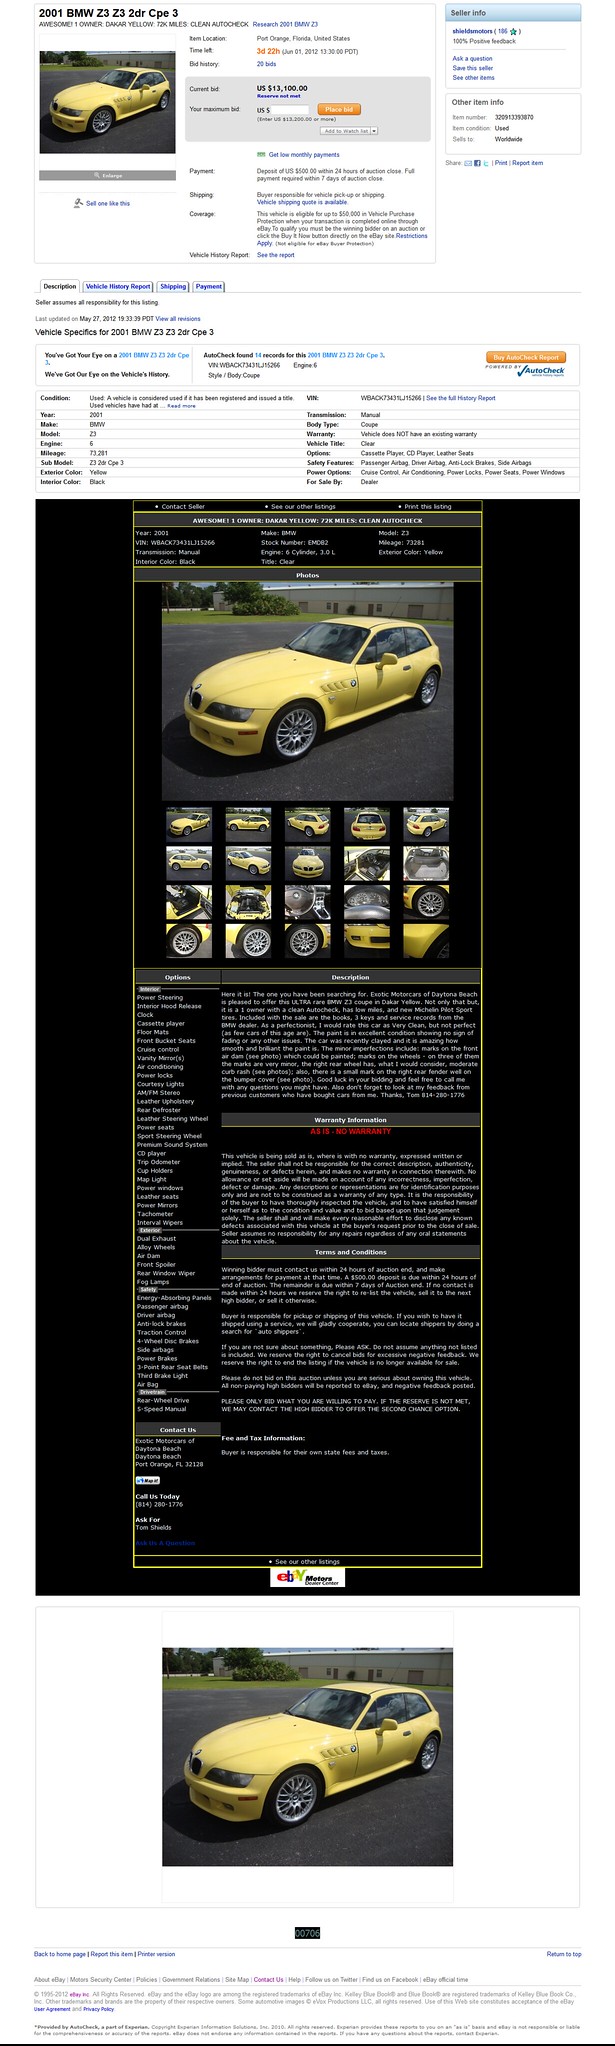 2001 Z3 Coupe | Dakar Yellow | Black | VIN WBACK73431LJ15266 | eBay Ad Screenshot | Item # 320913393870 | shieldsmotors